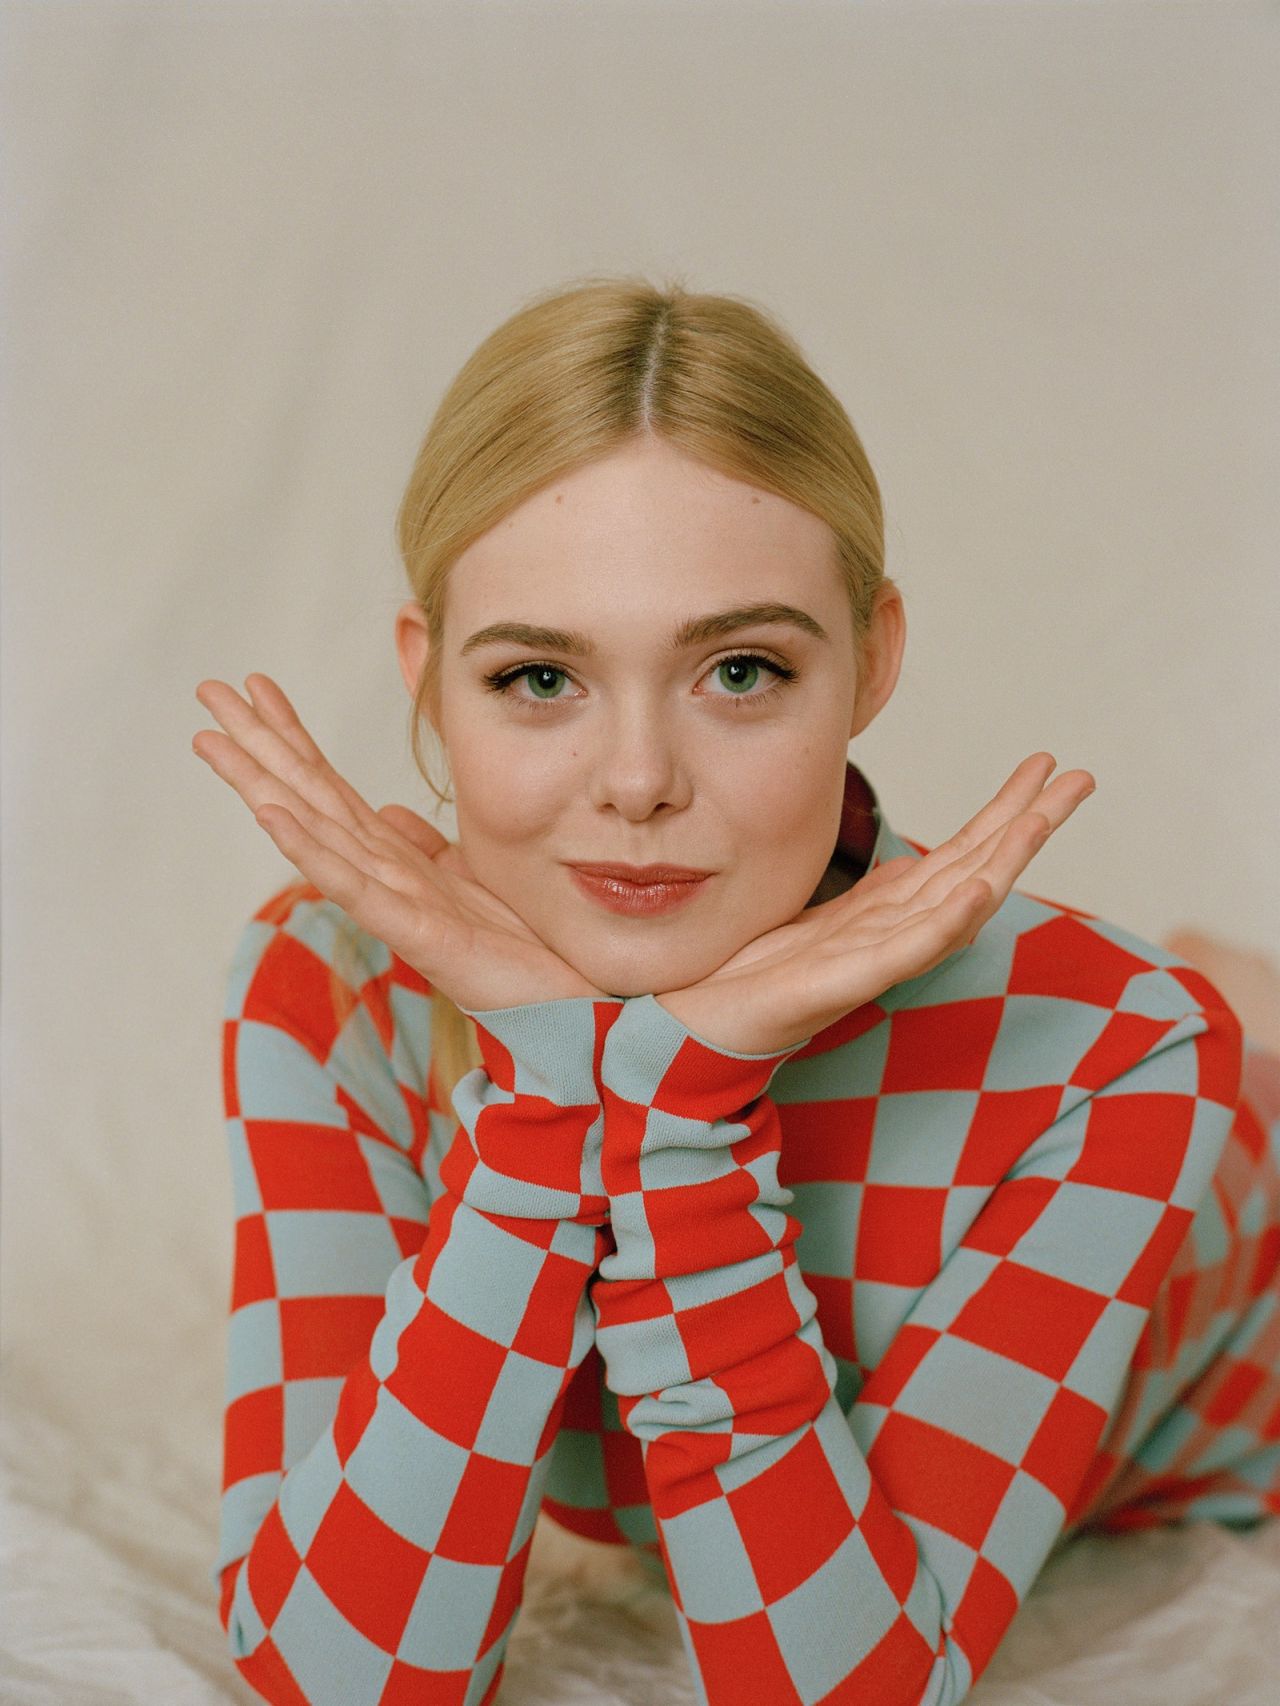 Elle Fanning Photoshoot For Teen Vogue Magazine April 2019 Celebmafia